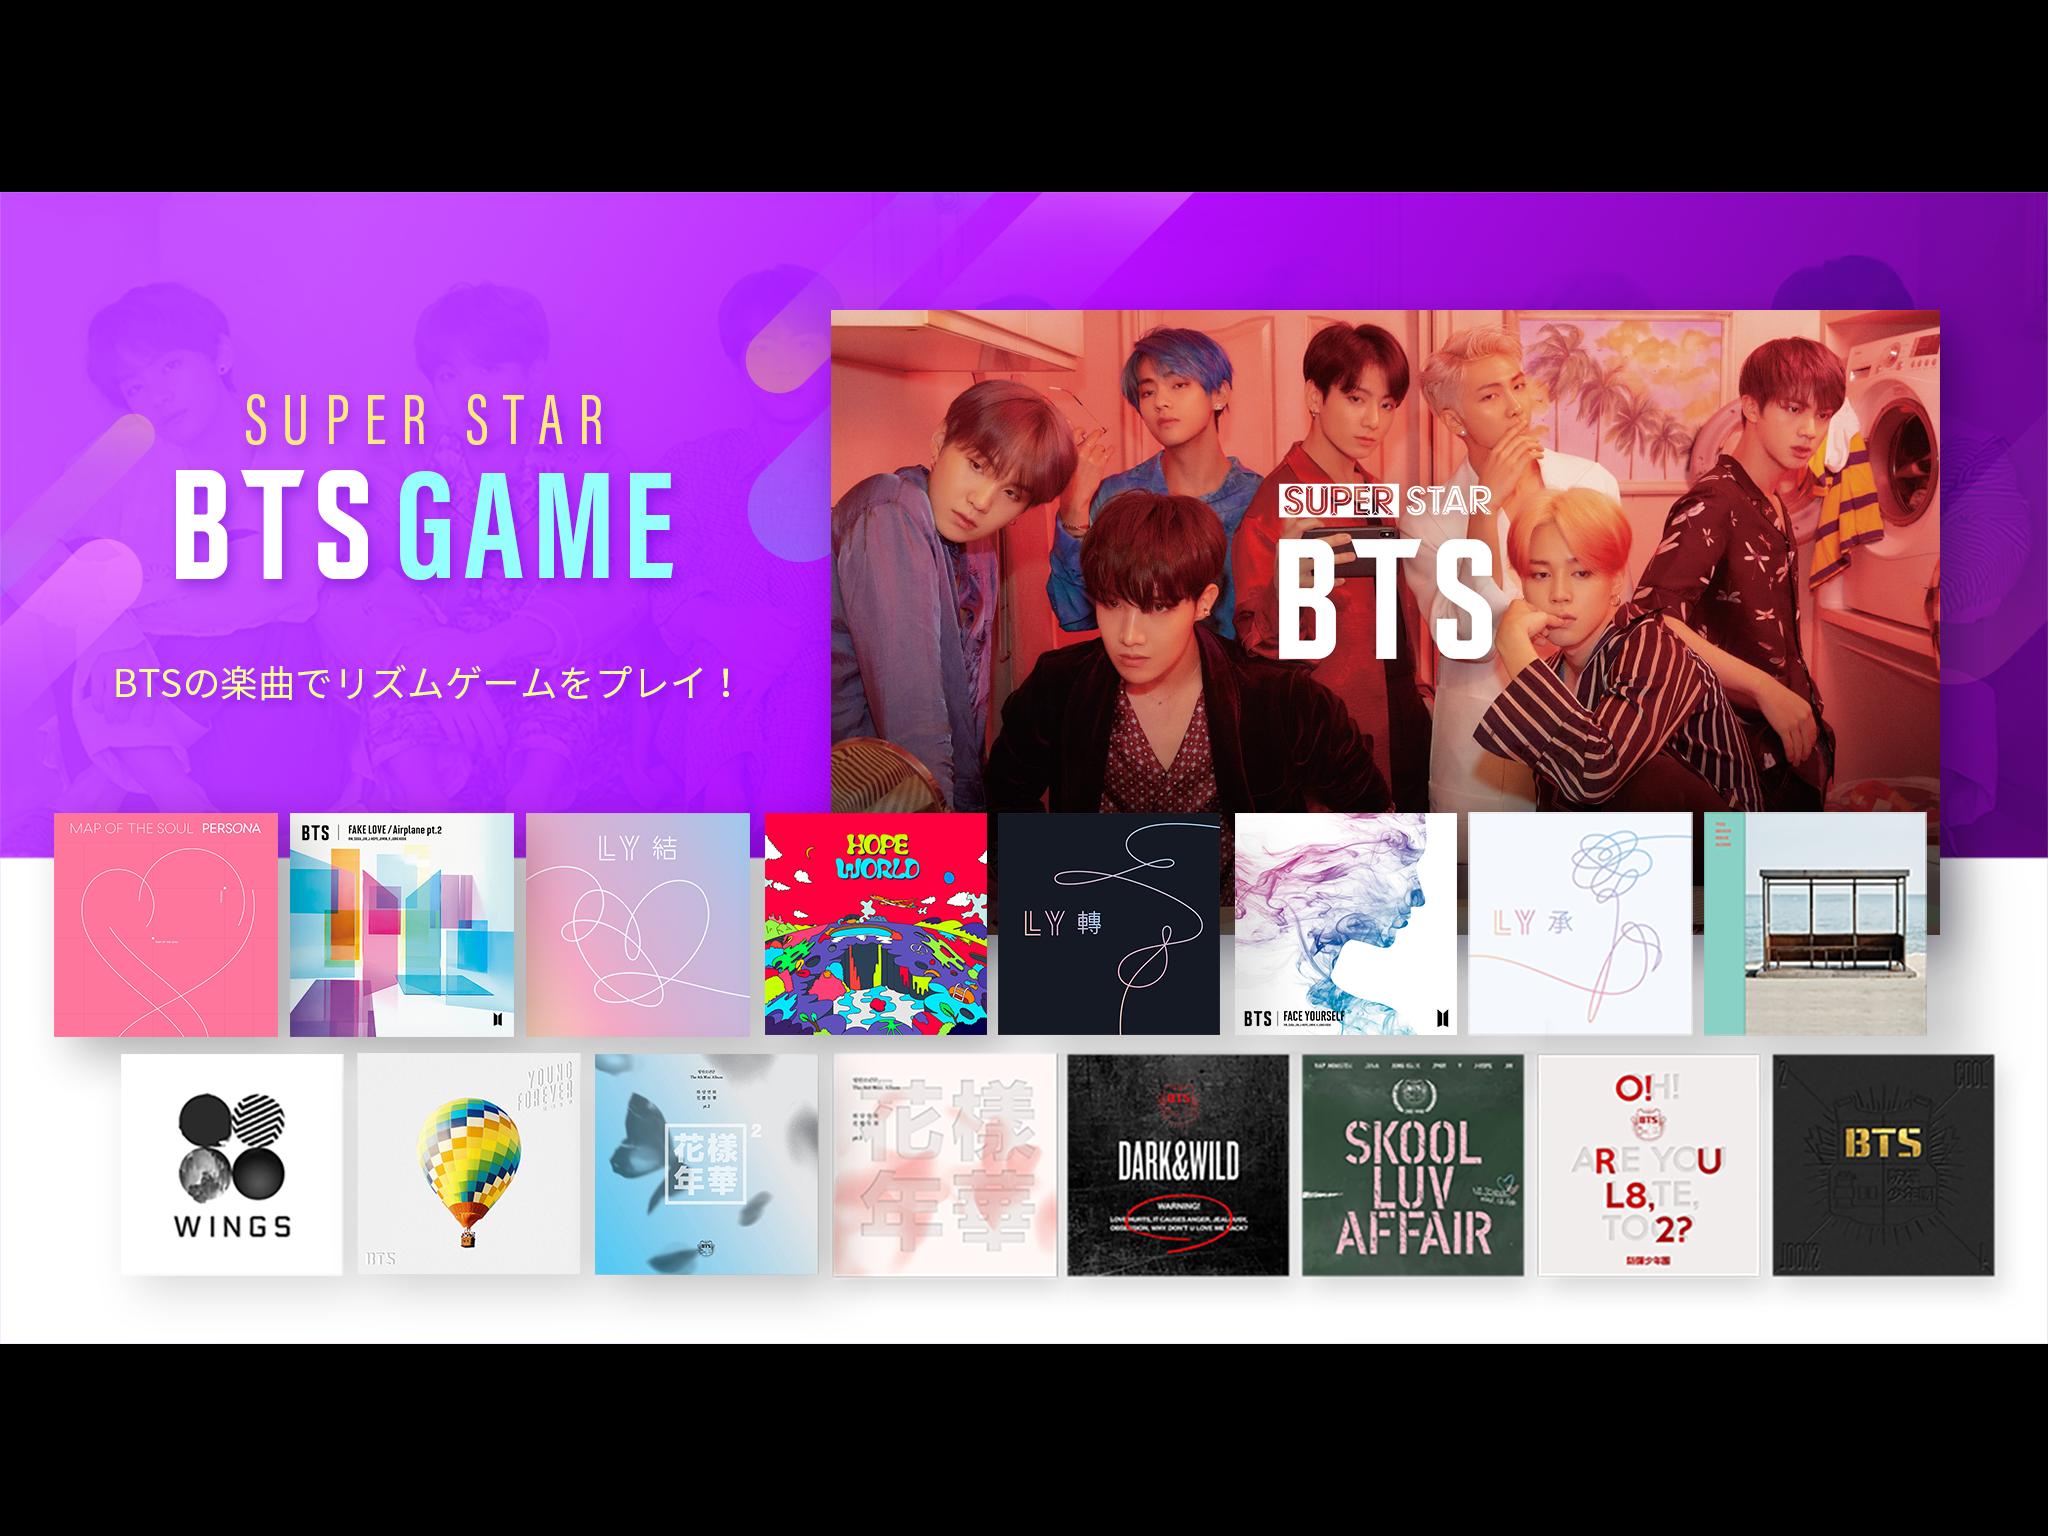 SUPERSTAR BTS for Android - APK Download